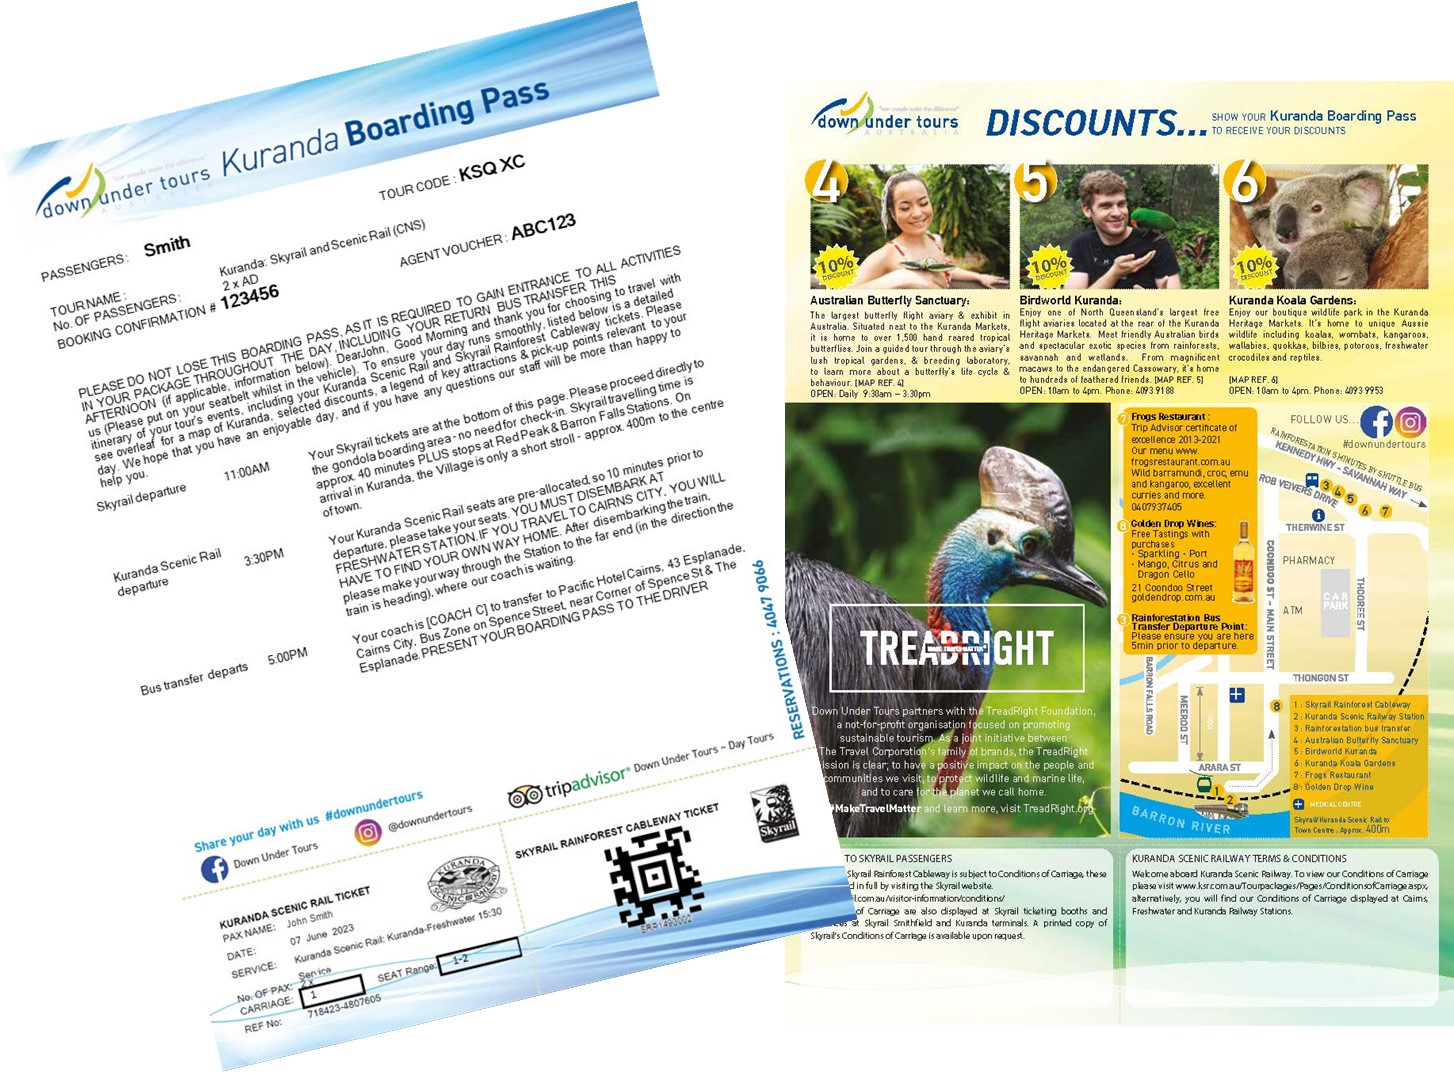 Written trip guide for Kuranda Tour showing discount vouchers for Kuranda's wildlife parks